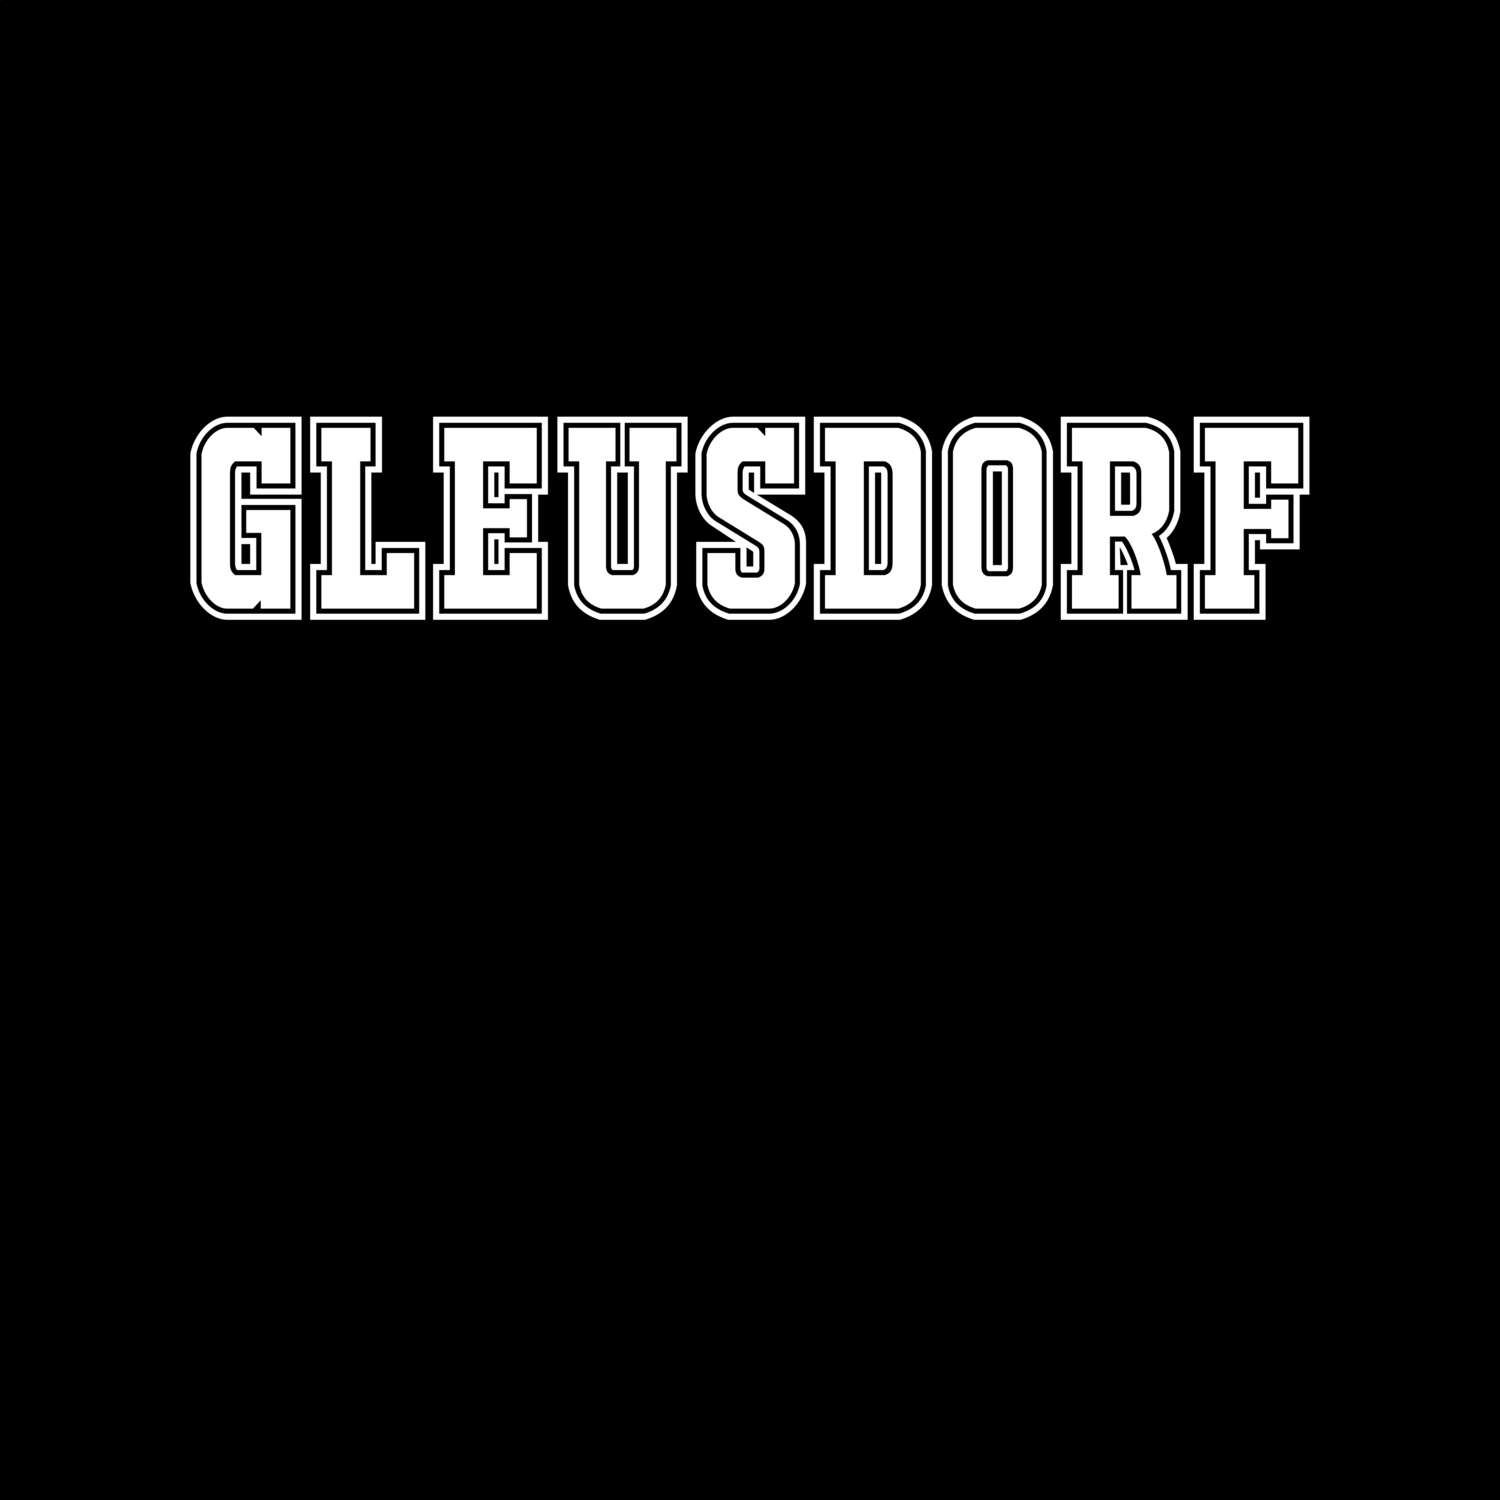 Gleusdorf T-Shirt »Classic«